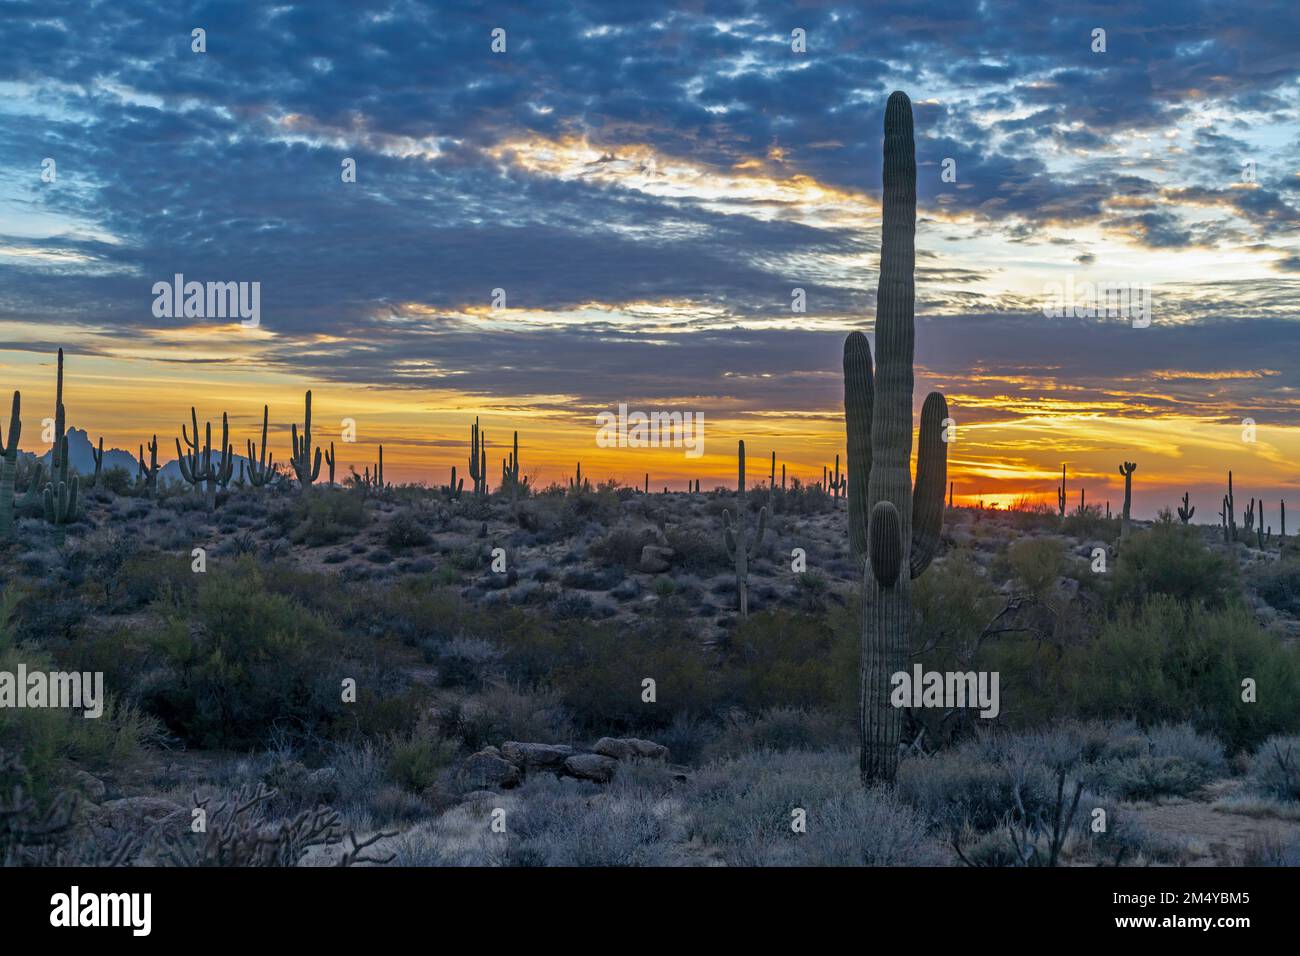 Wide Ratio Sonoran Desert Sunset Landscape With Cactus Stock Photo - Alamy